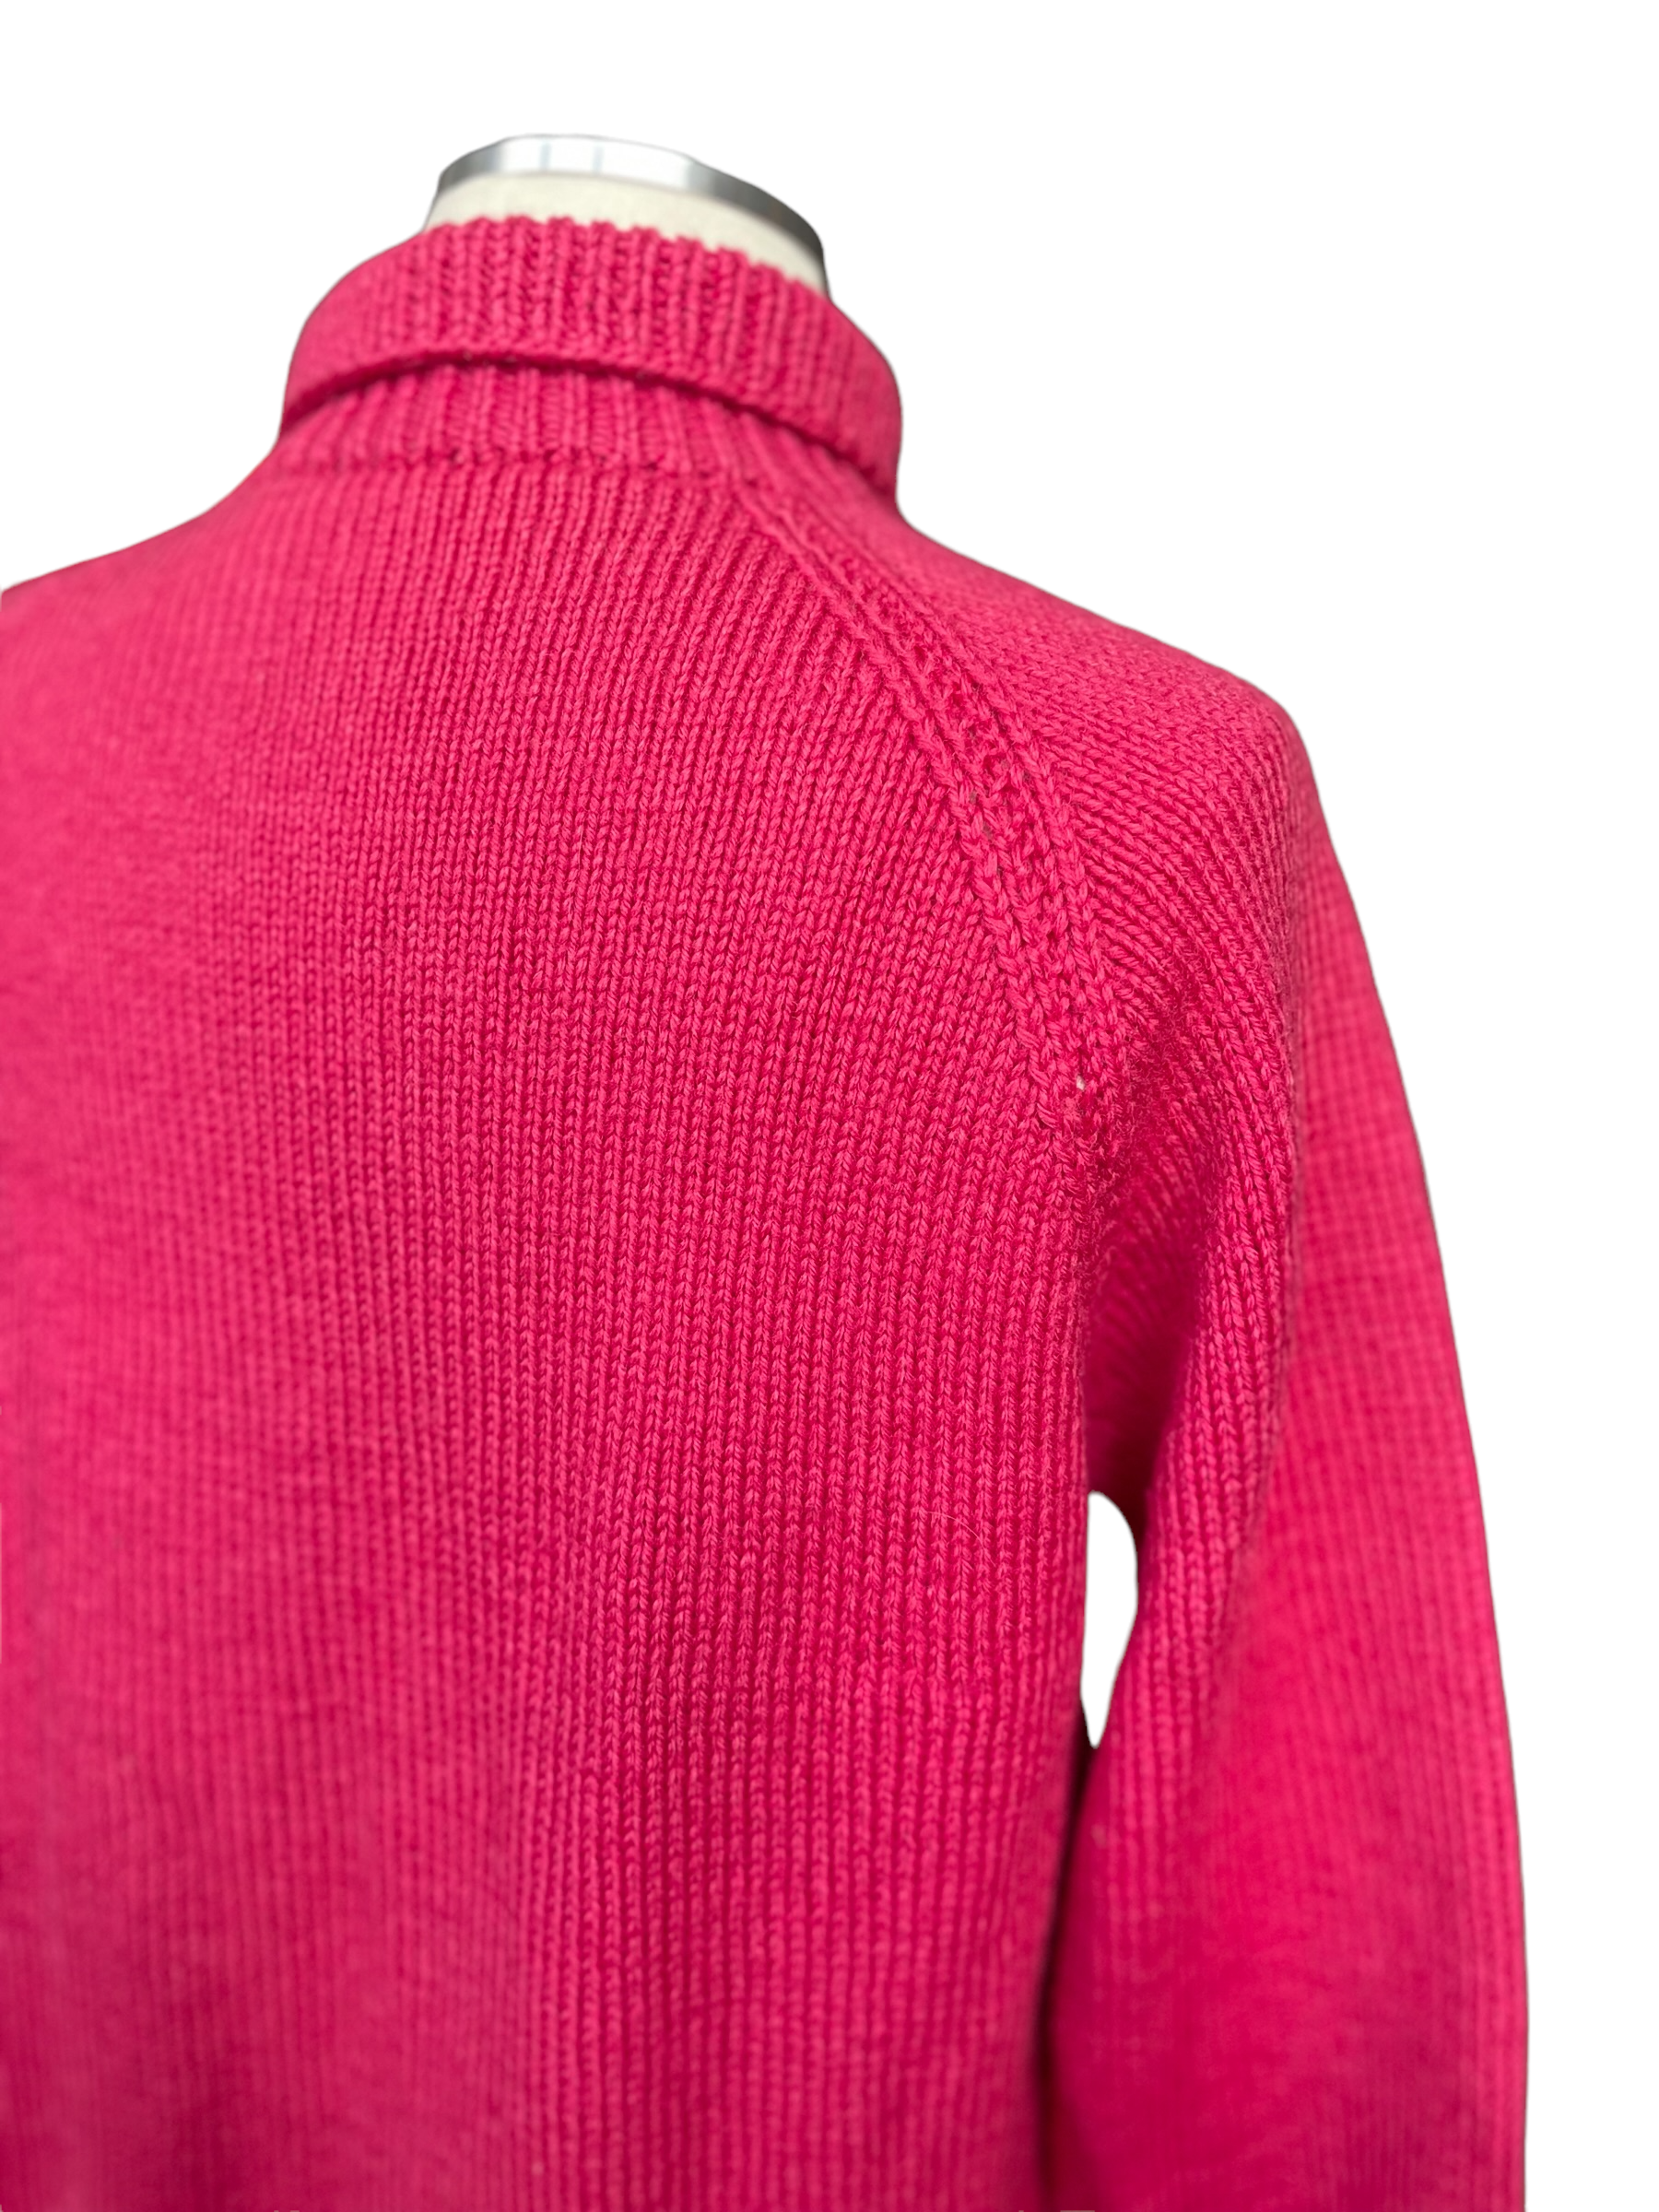 Right rear shoulder view Vintage 1940's Wool Hand Knit Magenta Zip Up Cardigan Sweater | Barn Owl Vintage | Seattle True Vintage